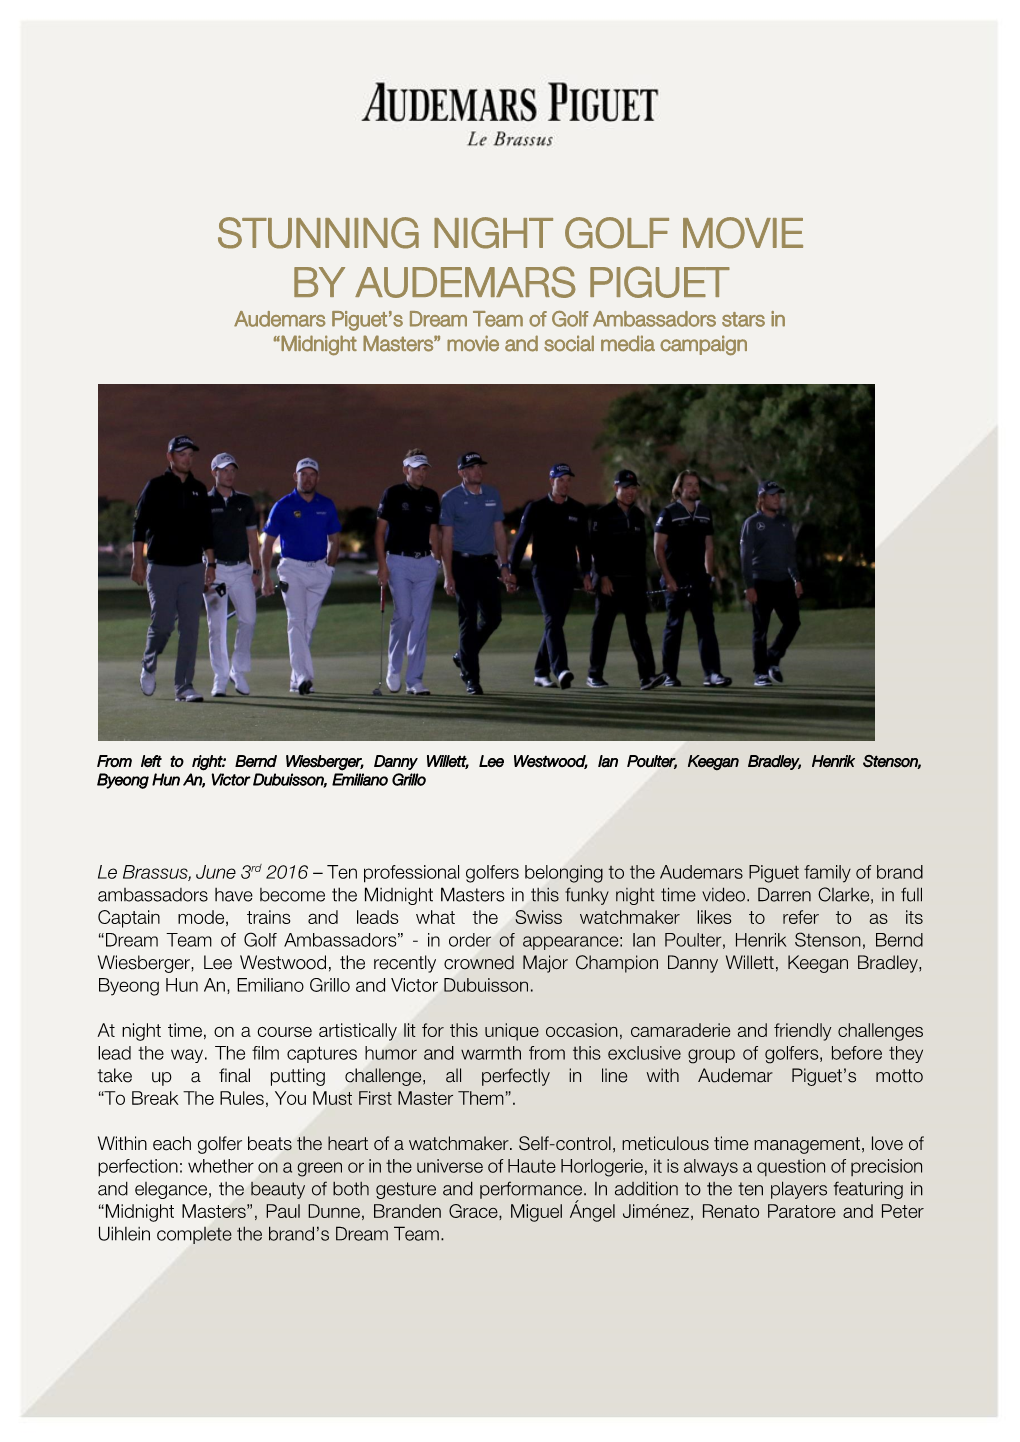 STUNNING NIGHT GOLF MOVIE by AUDEMARS PIGUET Audemars Piguet’S Dream Team of Golf Ambassadors Stars in “Midnight Masters” Movie and Social Media Campaign